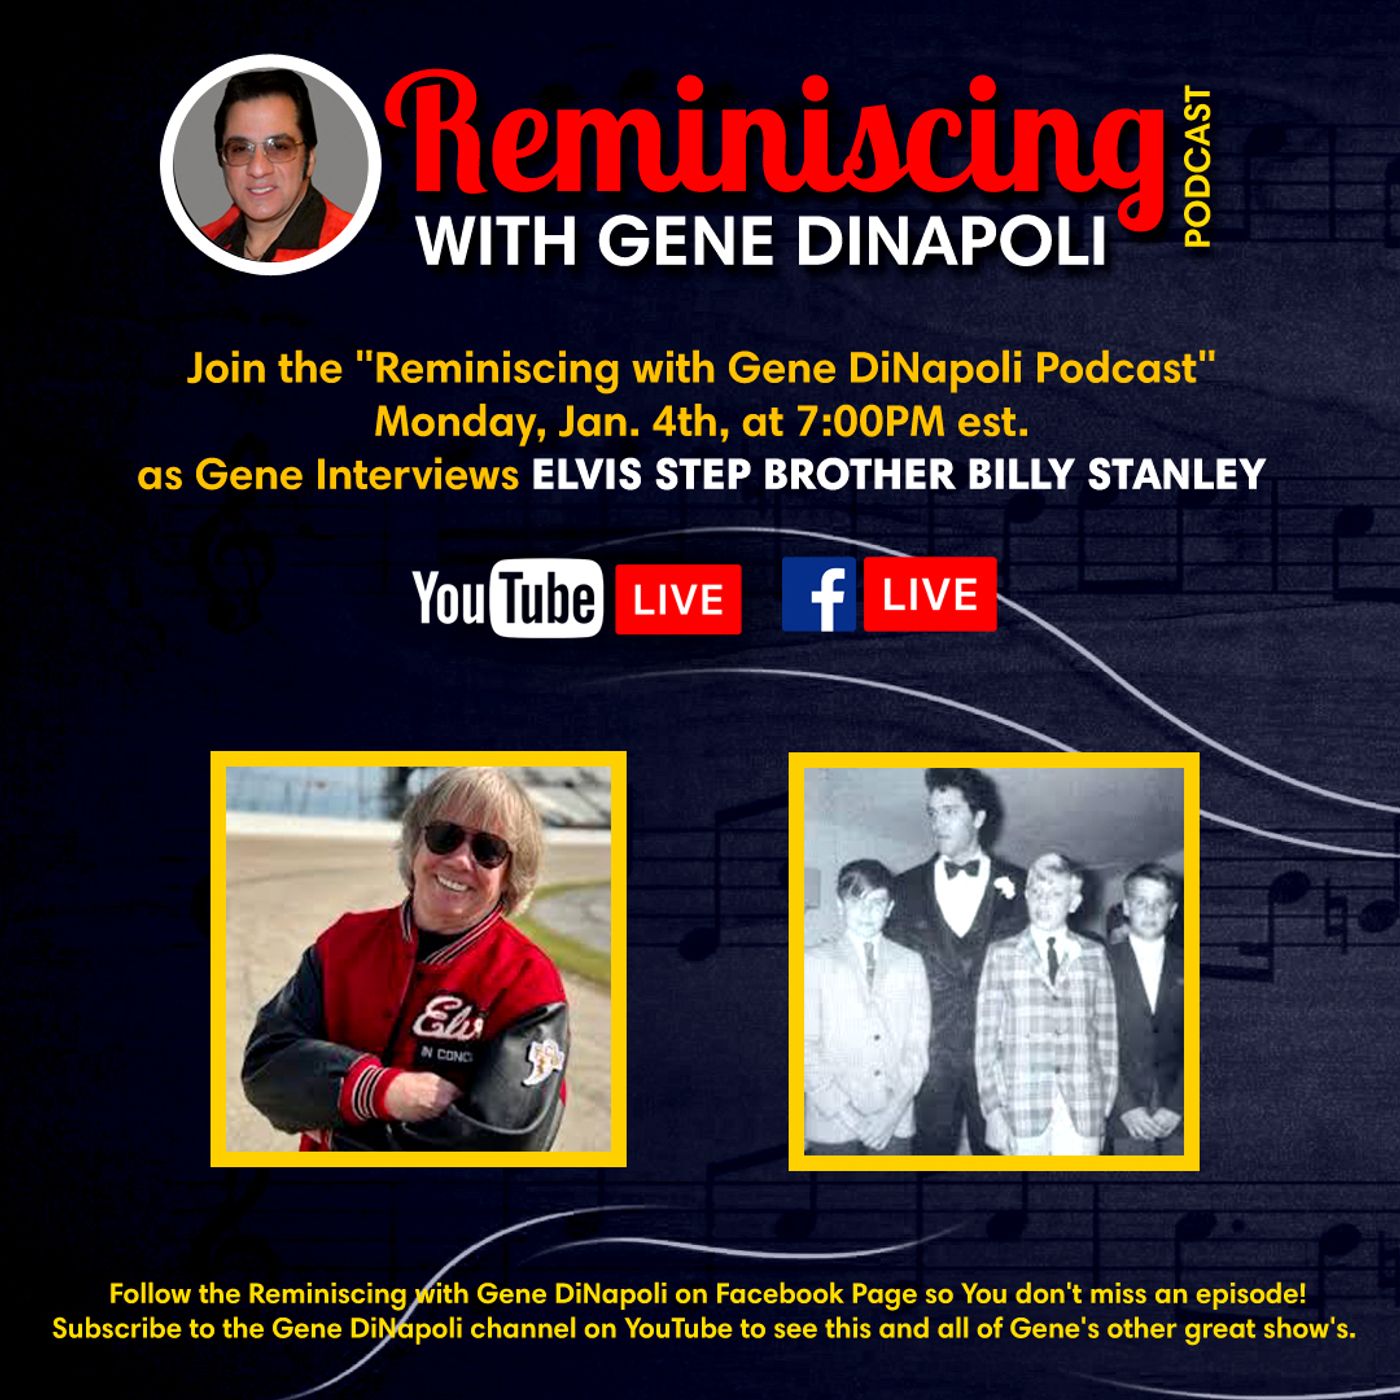 Billy Stanley, Elvis Presley’s Brother get’s interviewed by Gene DiNapoli